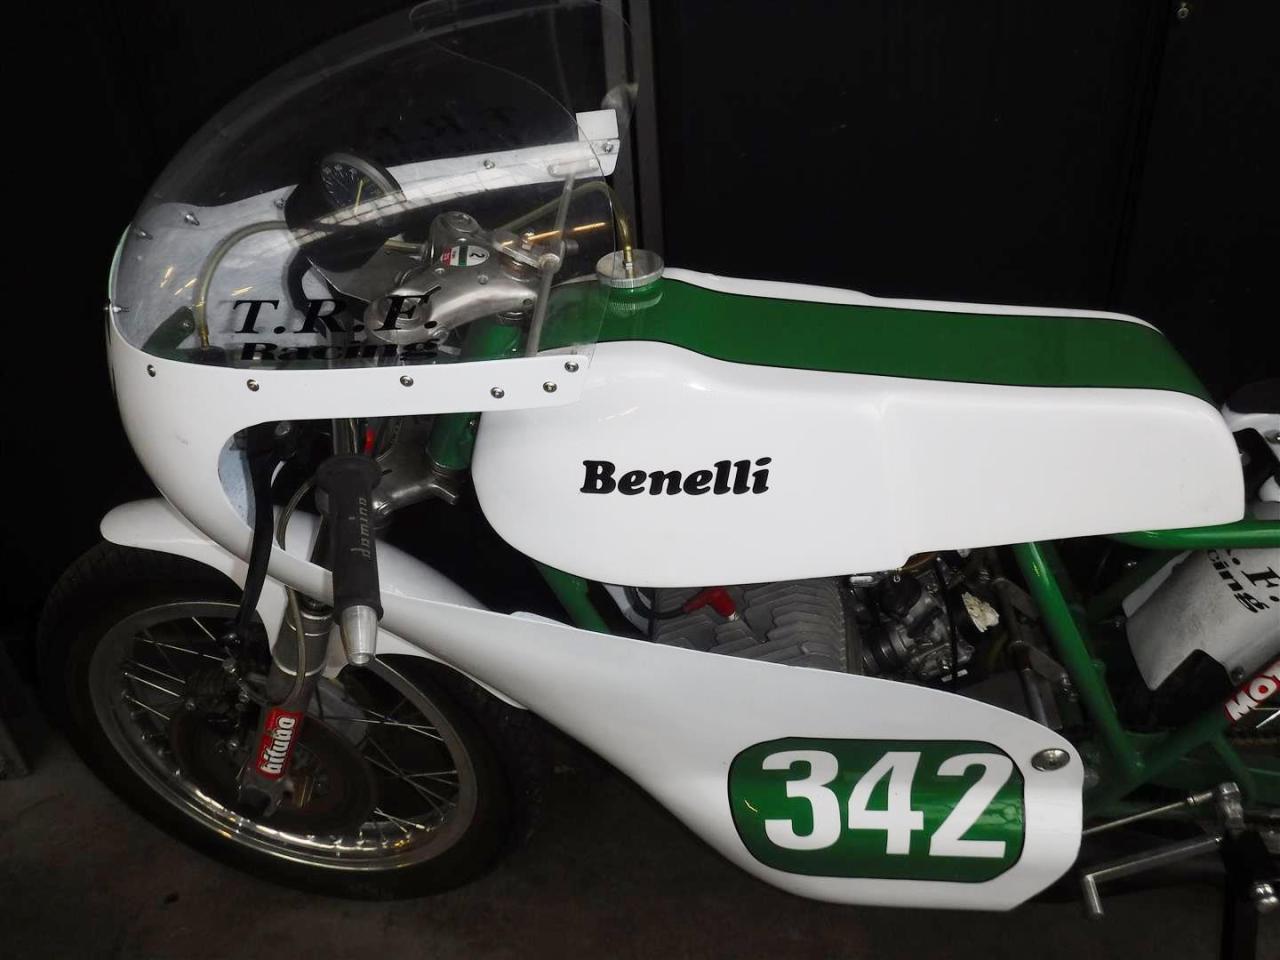 1969 Benelli 250 cc 2 cil racer